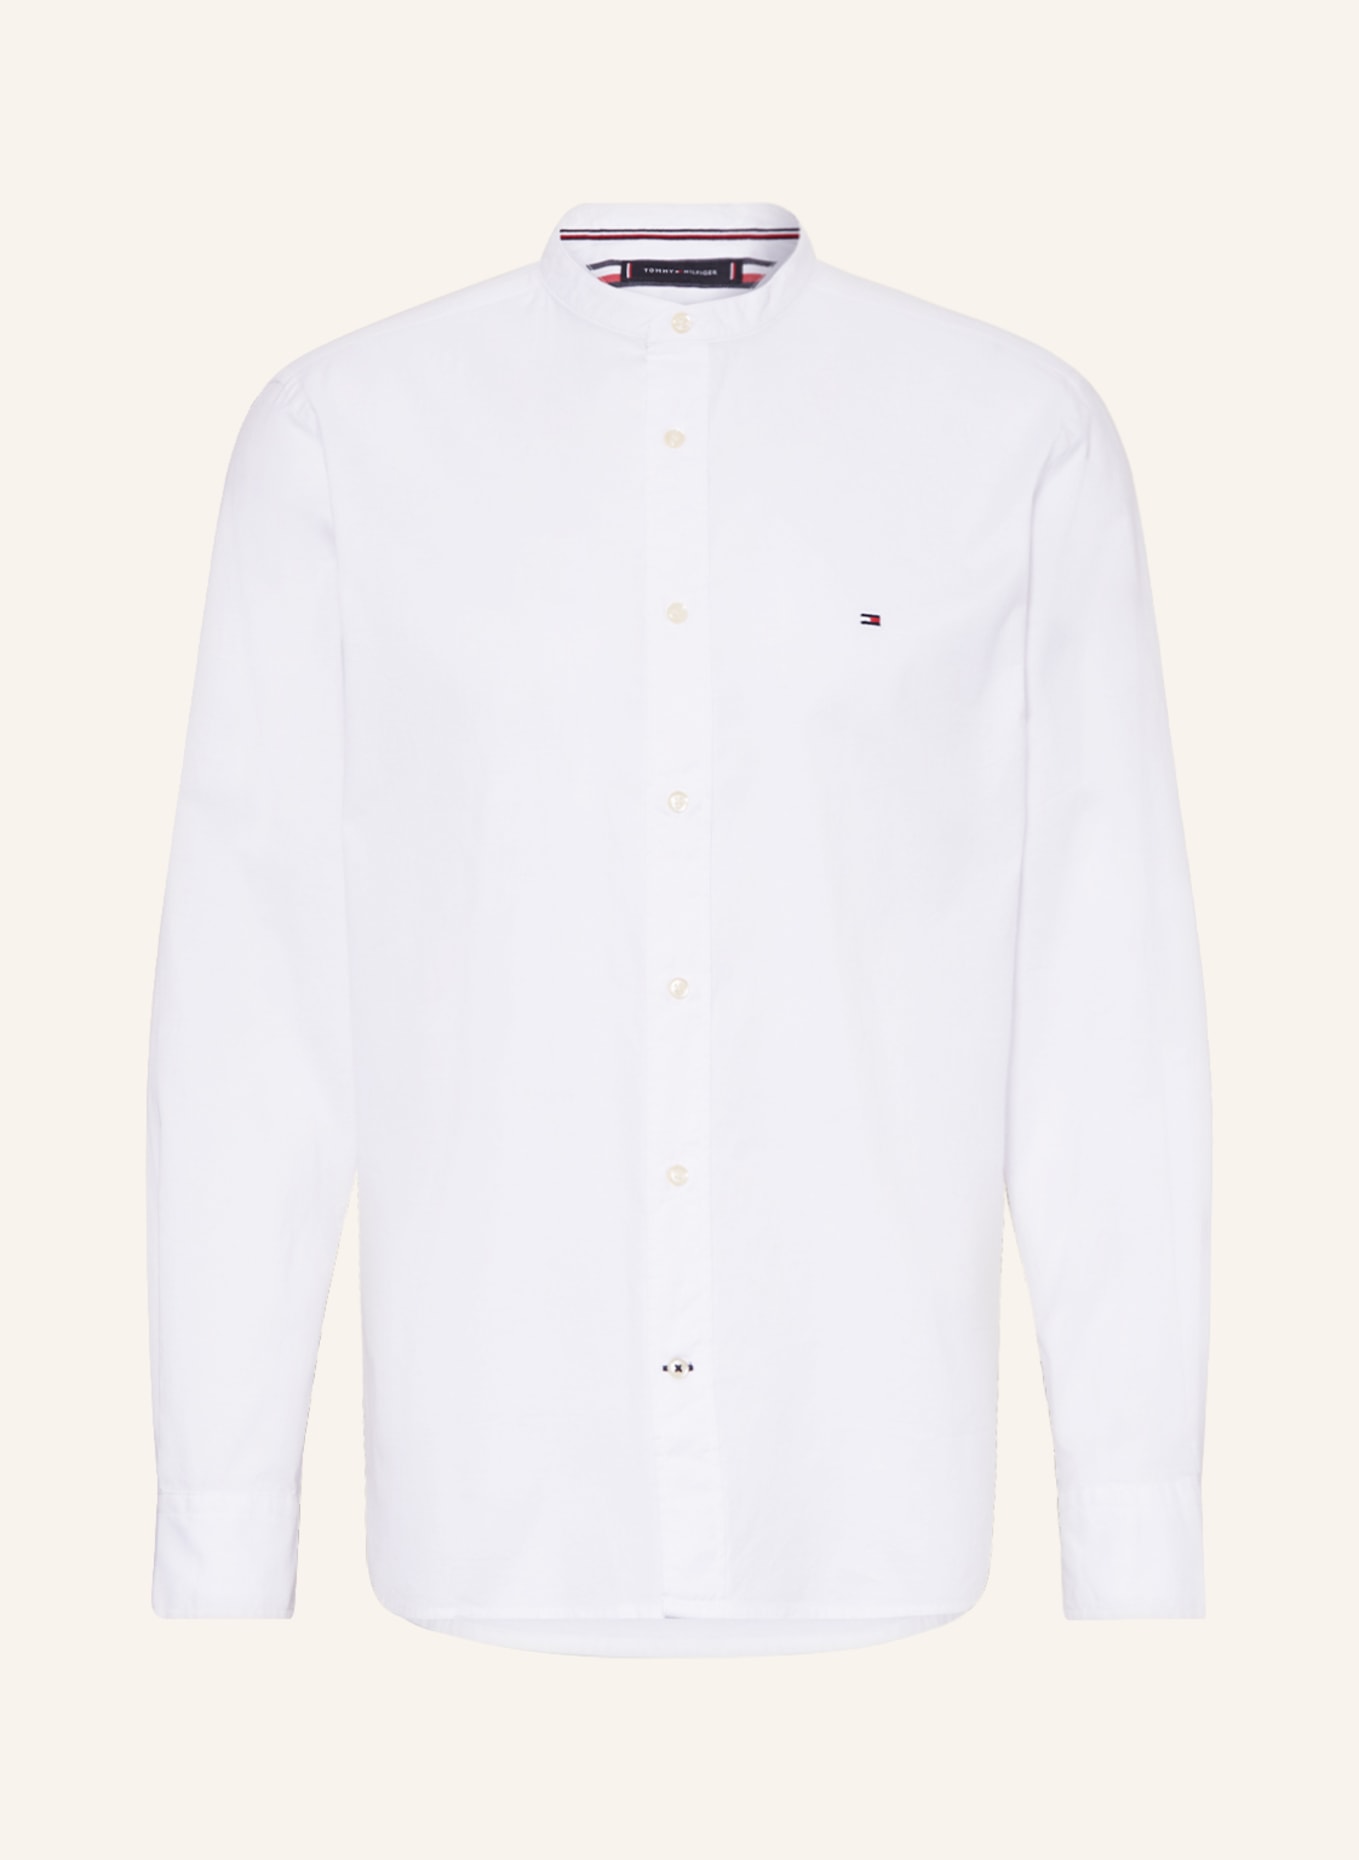 TOMMY HILFIGER Hemd Regular Fit, Farbe: WEISS (Bild 1)